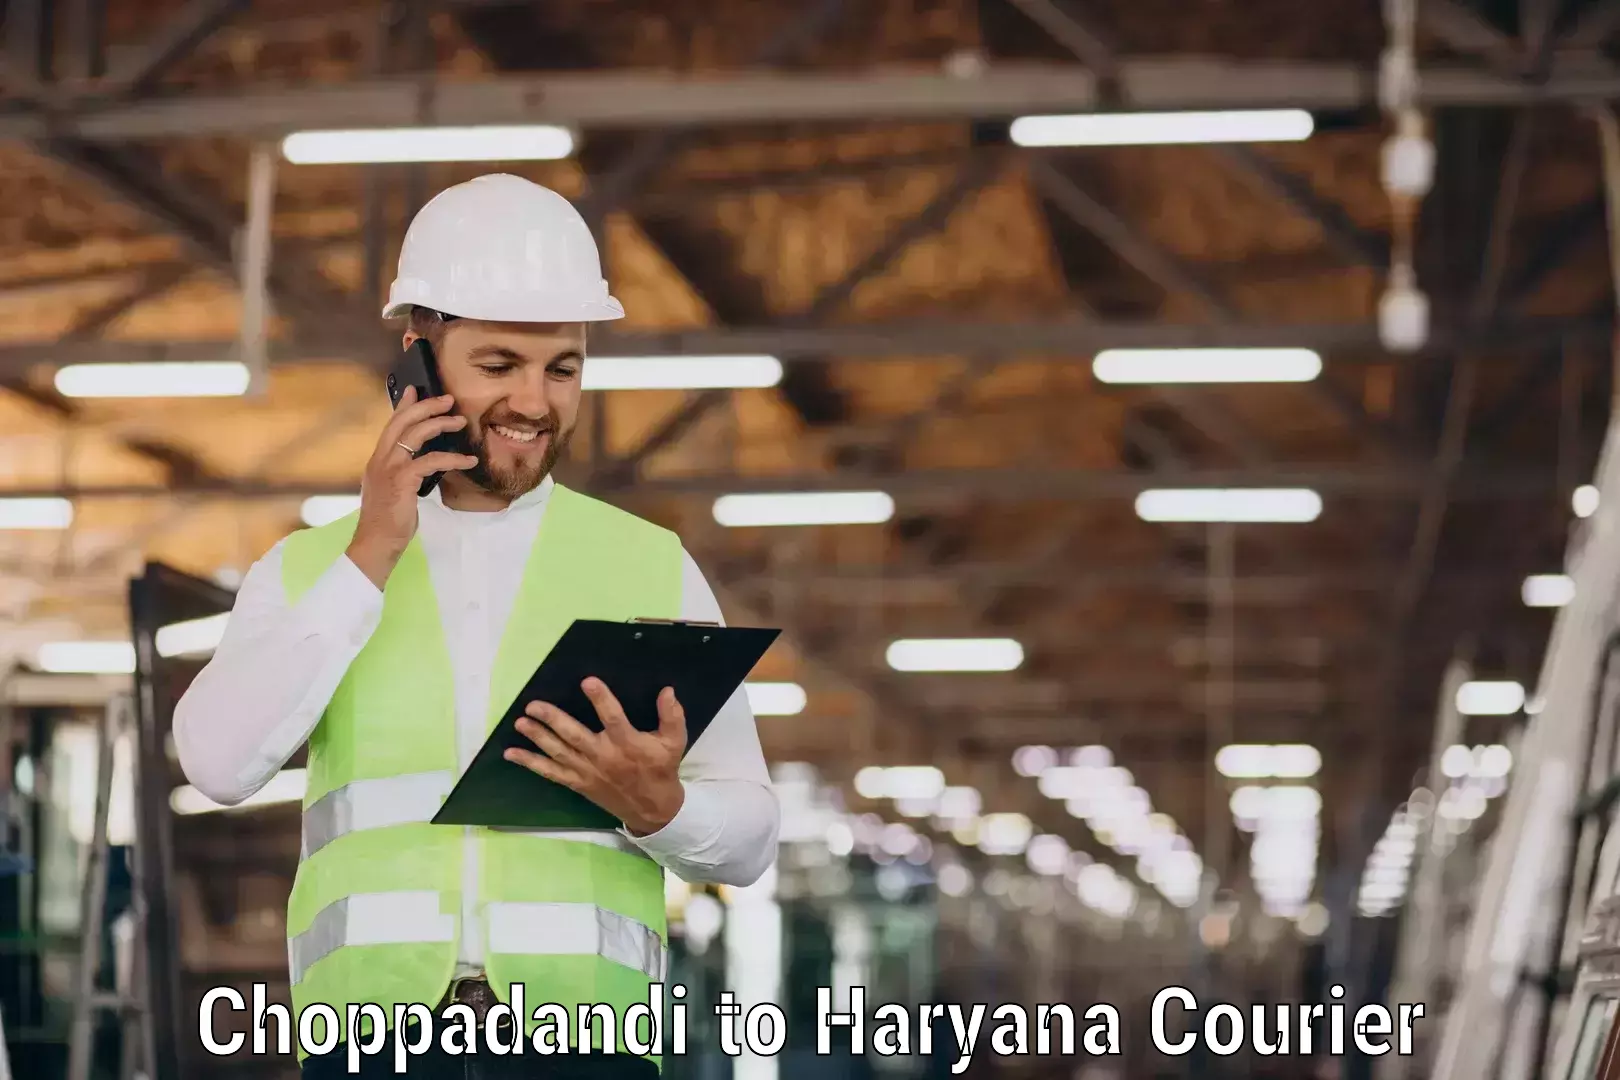 Global courier networks Choppadandi to Hansi